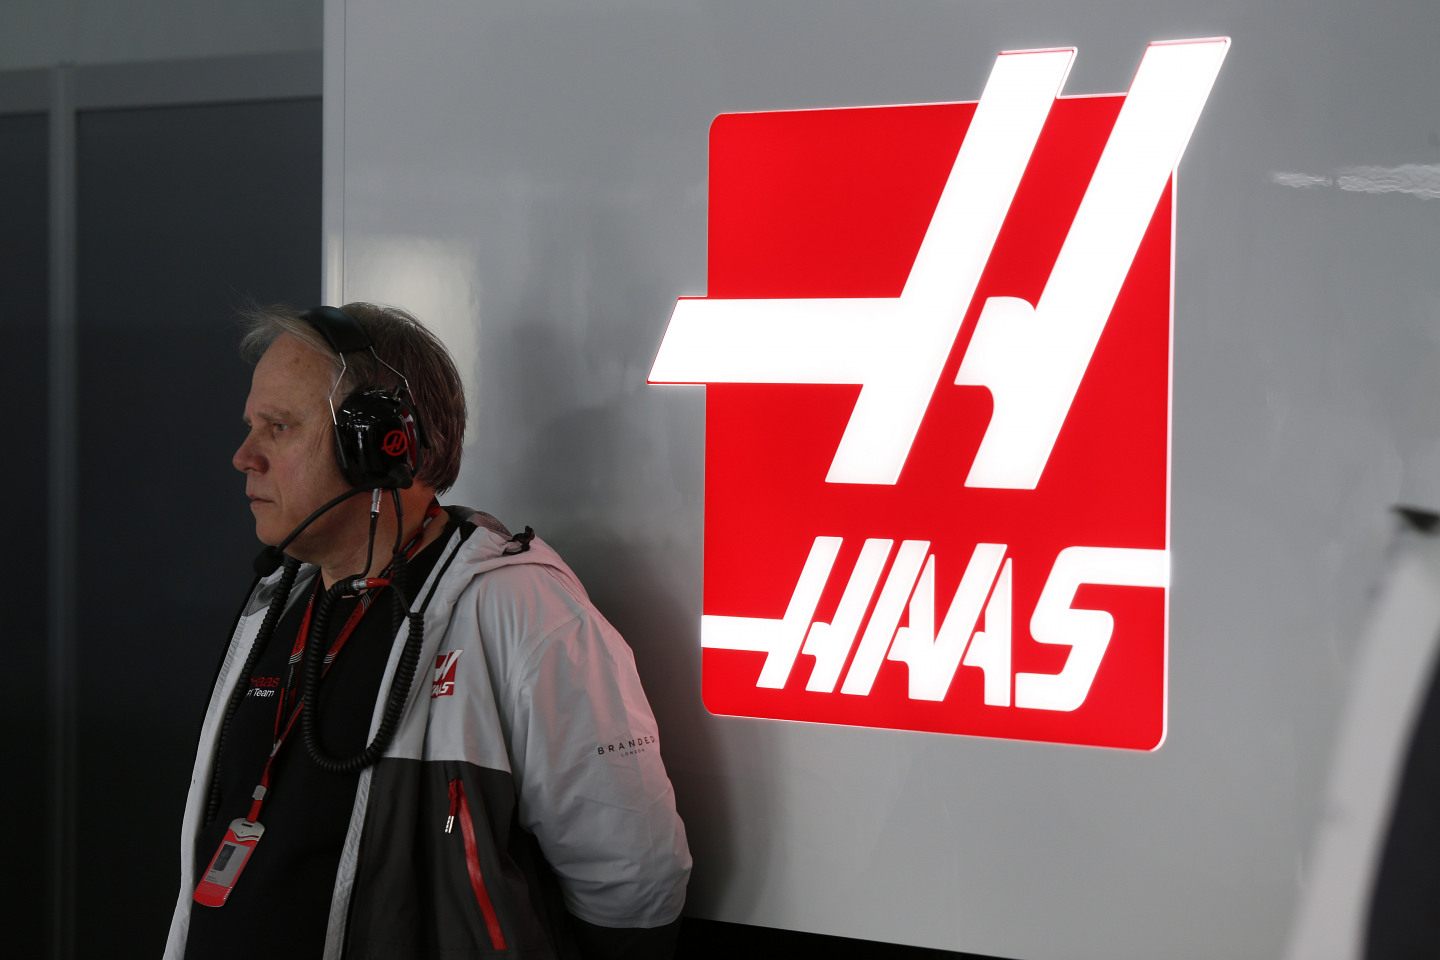 © Haas F1 Team